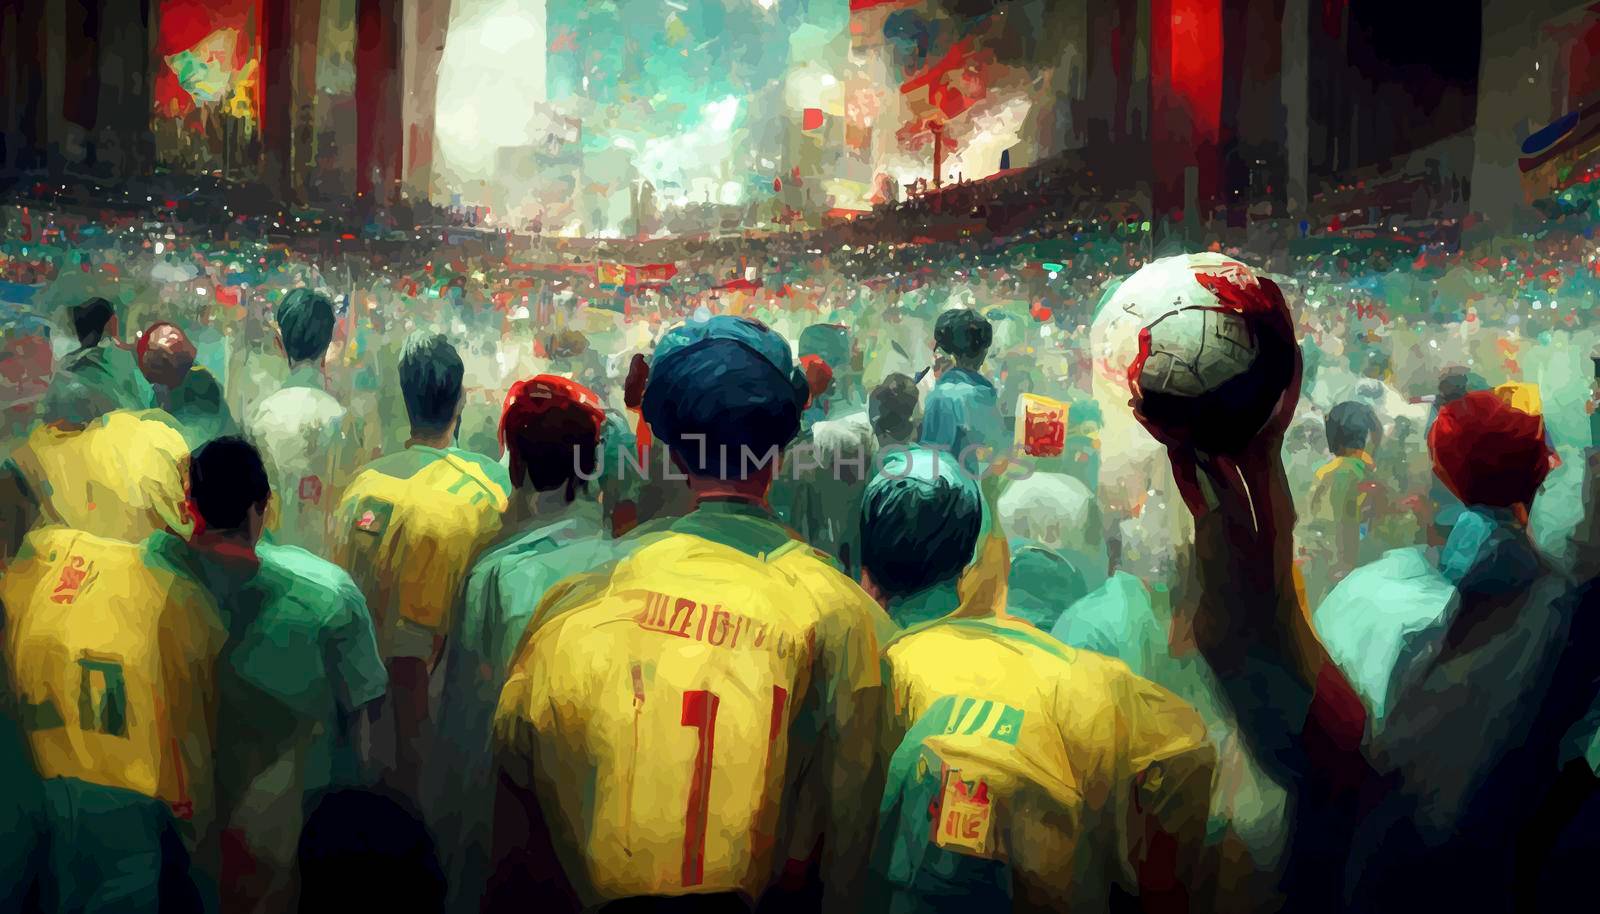 illustration of the soccer world cup, qatar 2022 by JpRamos